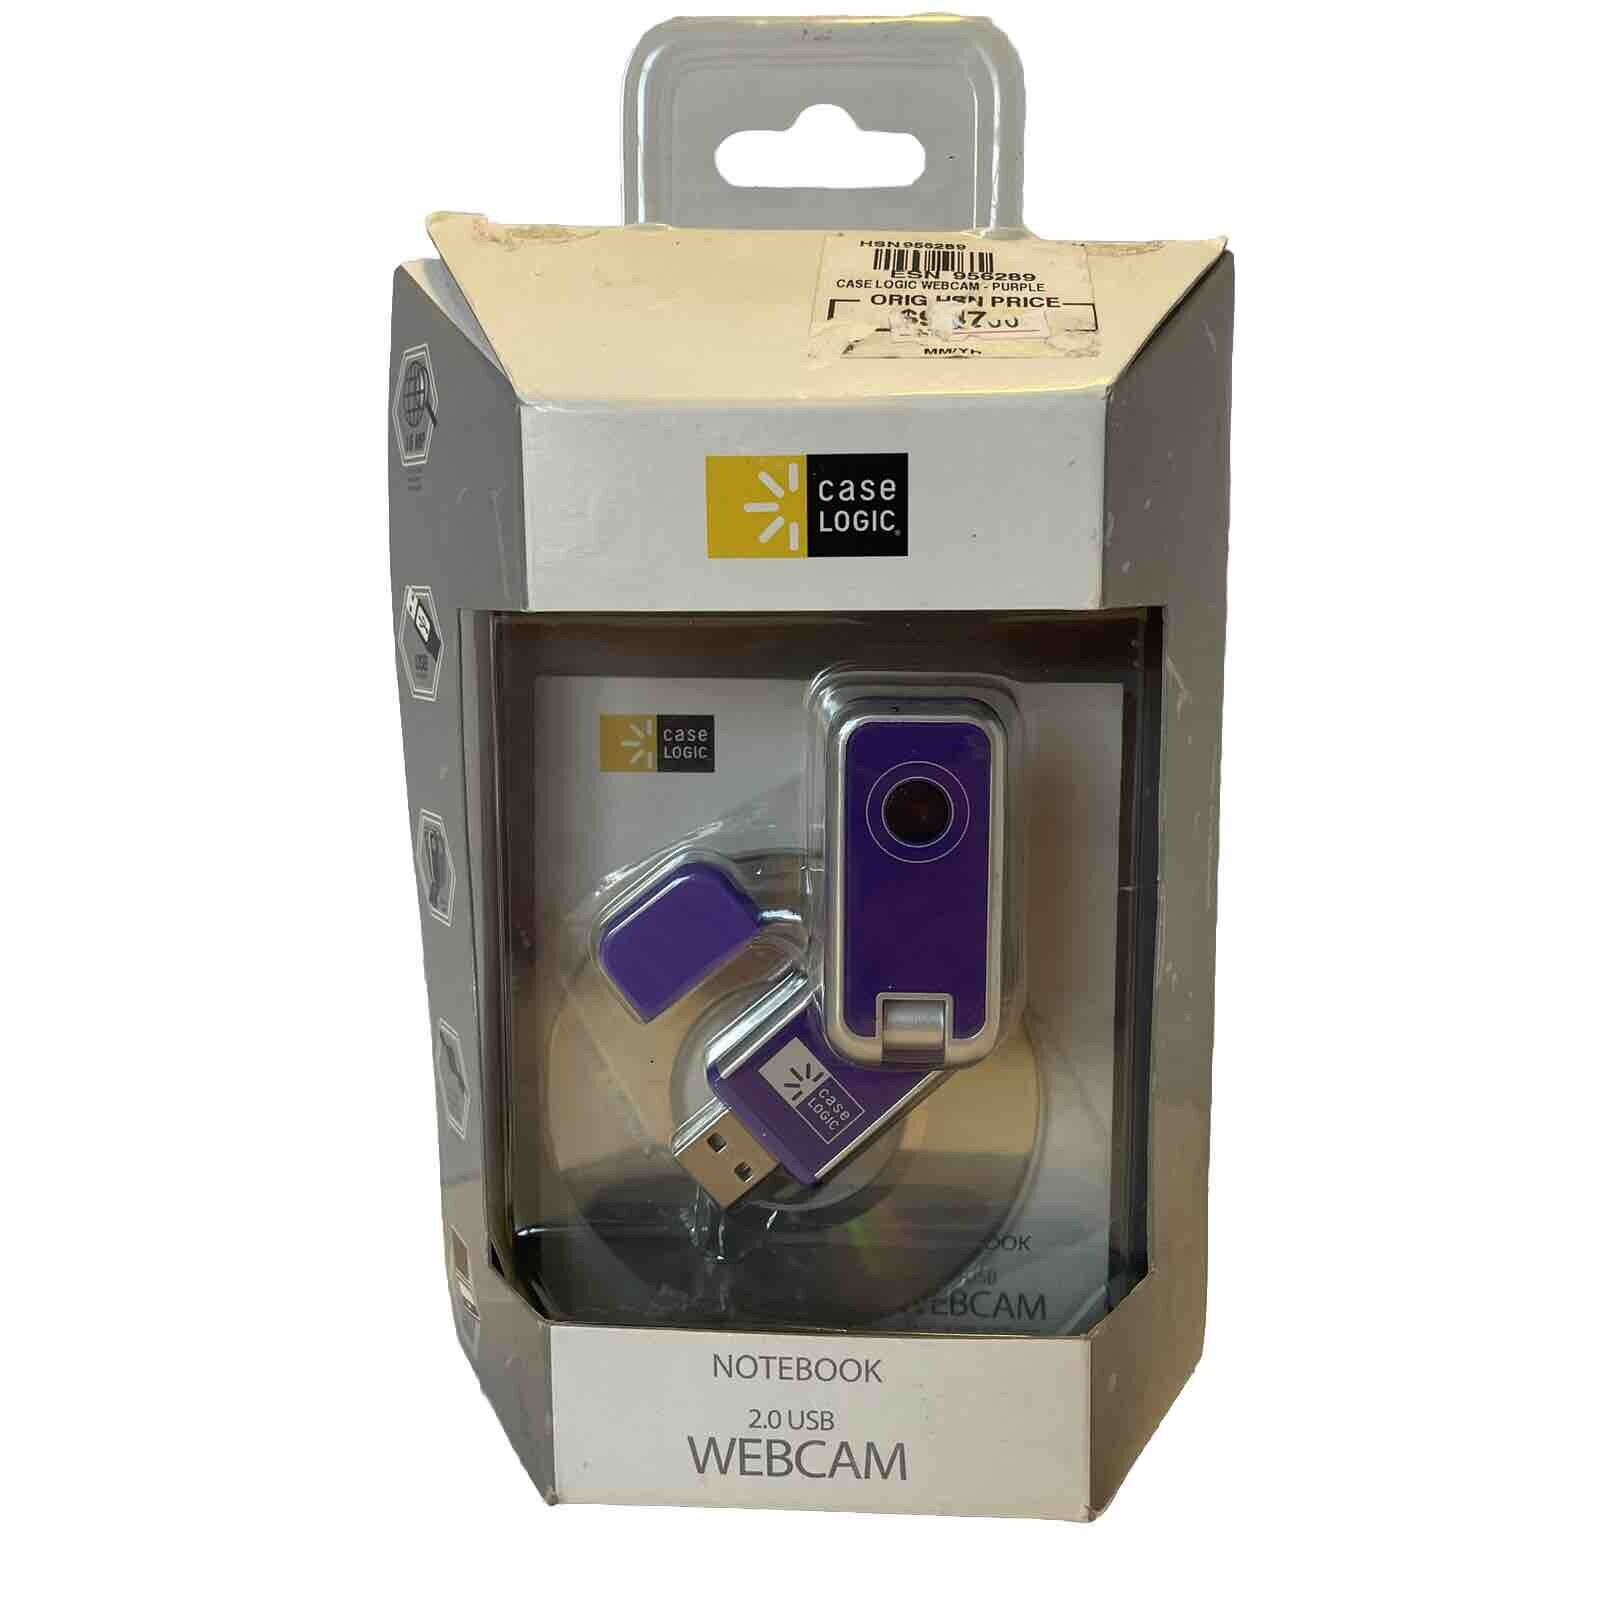 Case Logic Notebook 2.0 USB Webcam Built in Mic Software  Plug & Play Purple